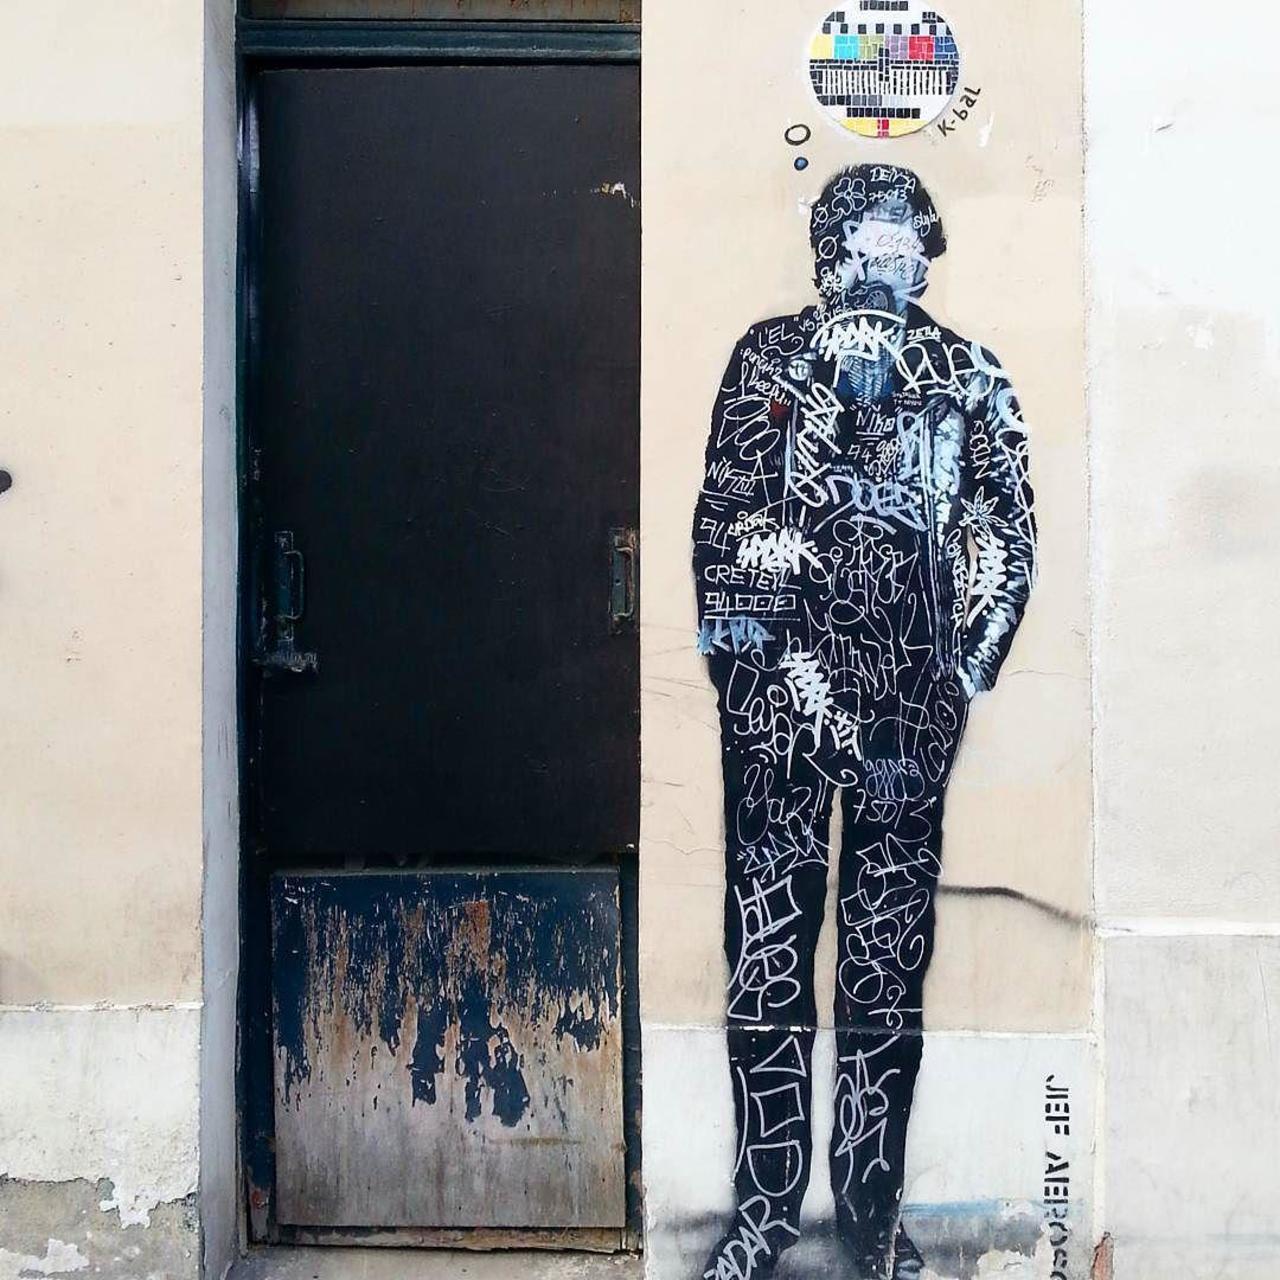 #Paris #graffiti photo by @fotoflaneuse http://ift.tt/1jV7AKz #StreetArt http://t.co/IgU52C7Ys9